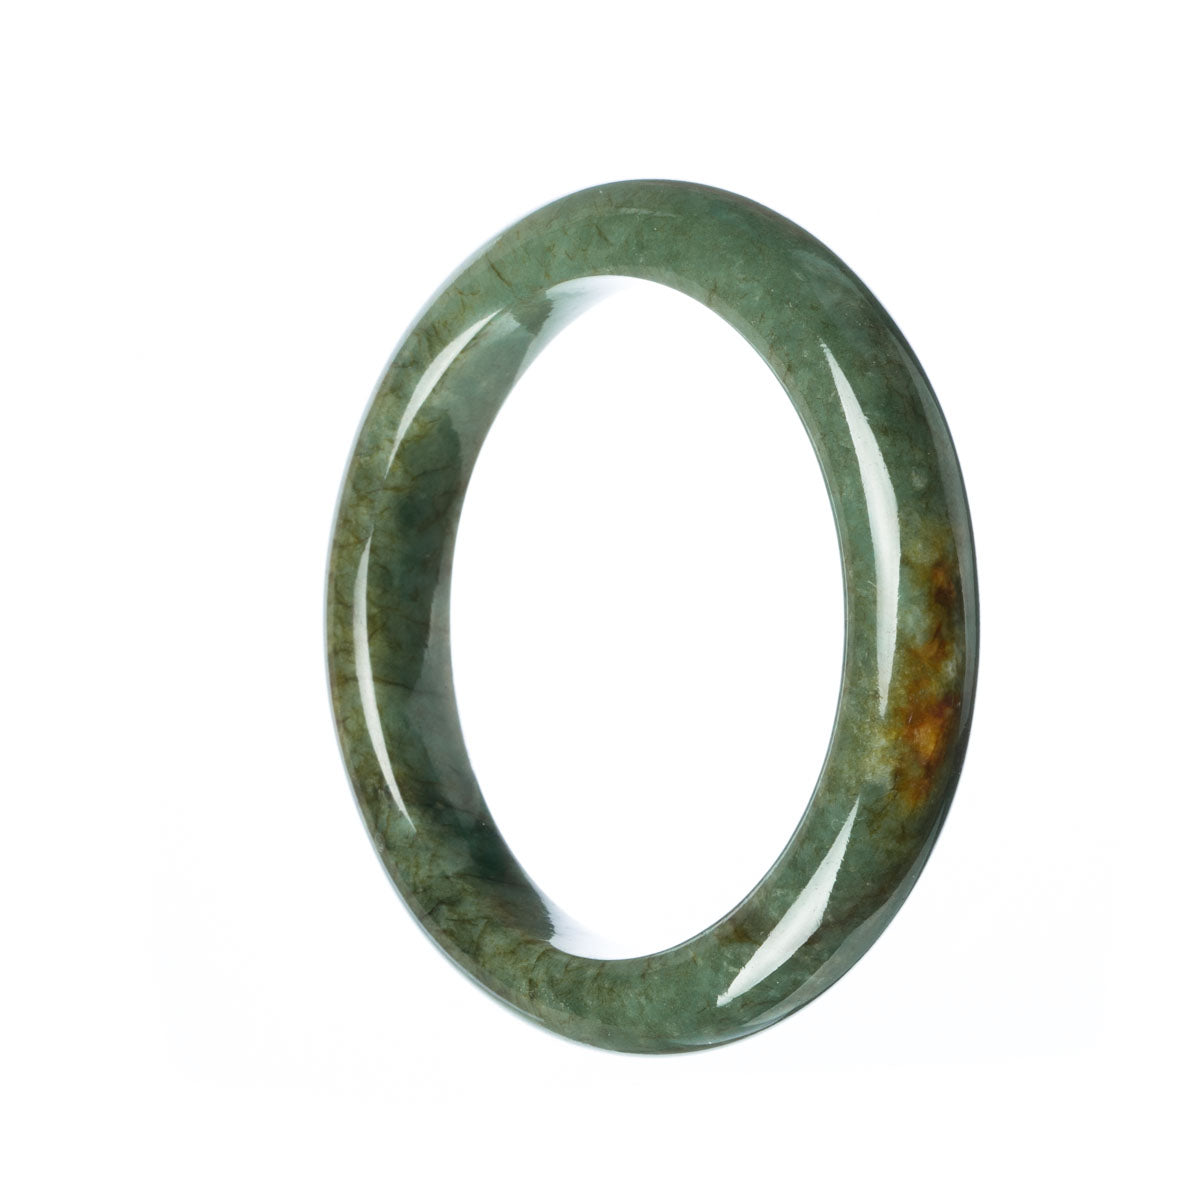 A dark green Burmese jade bracelet with a semi-round shape, measuring 56mm. Certified Type A.